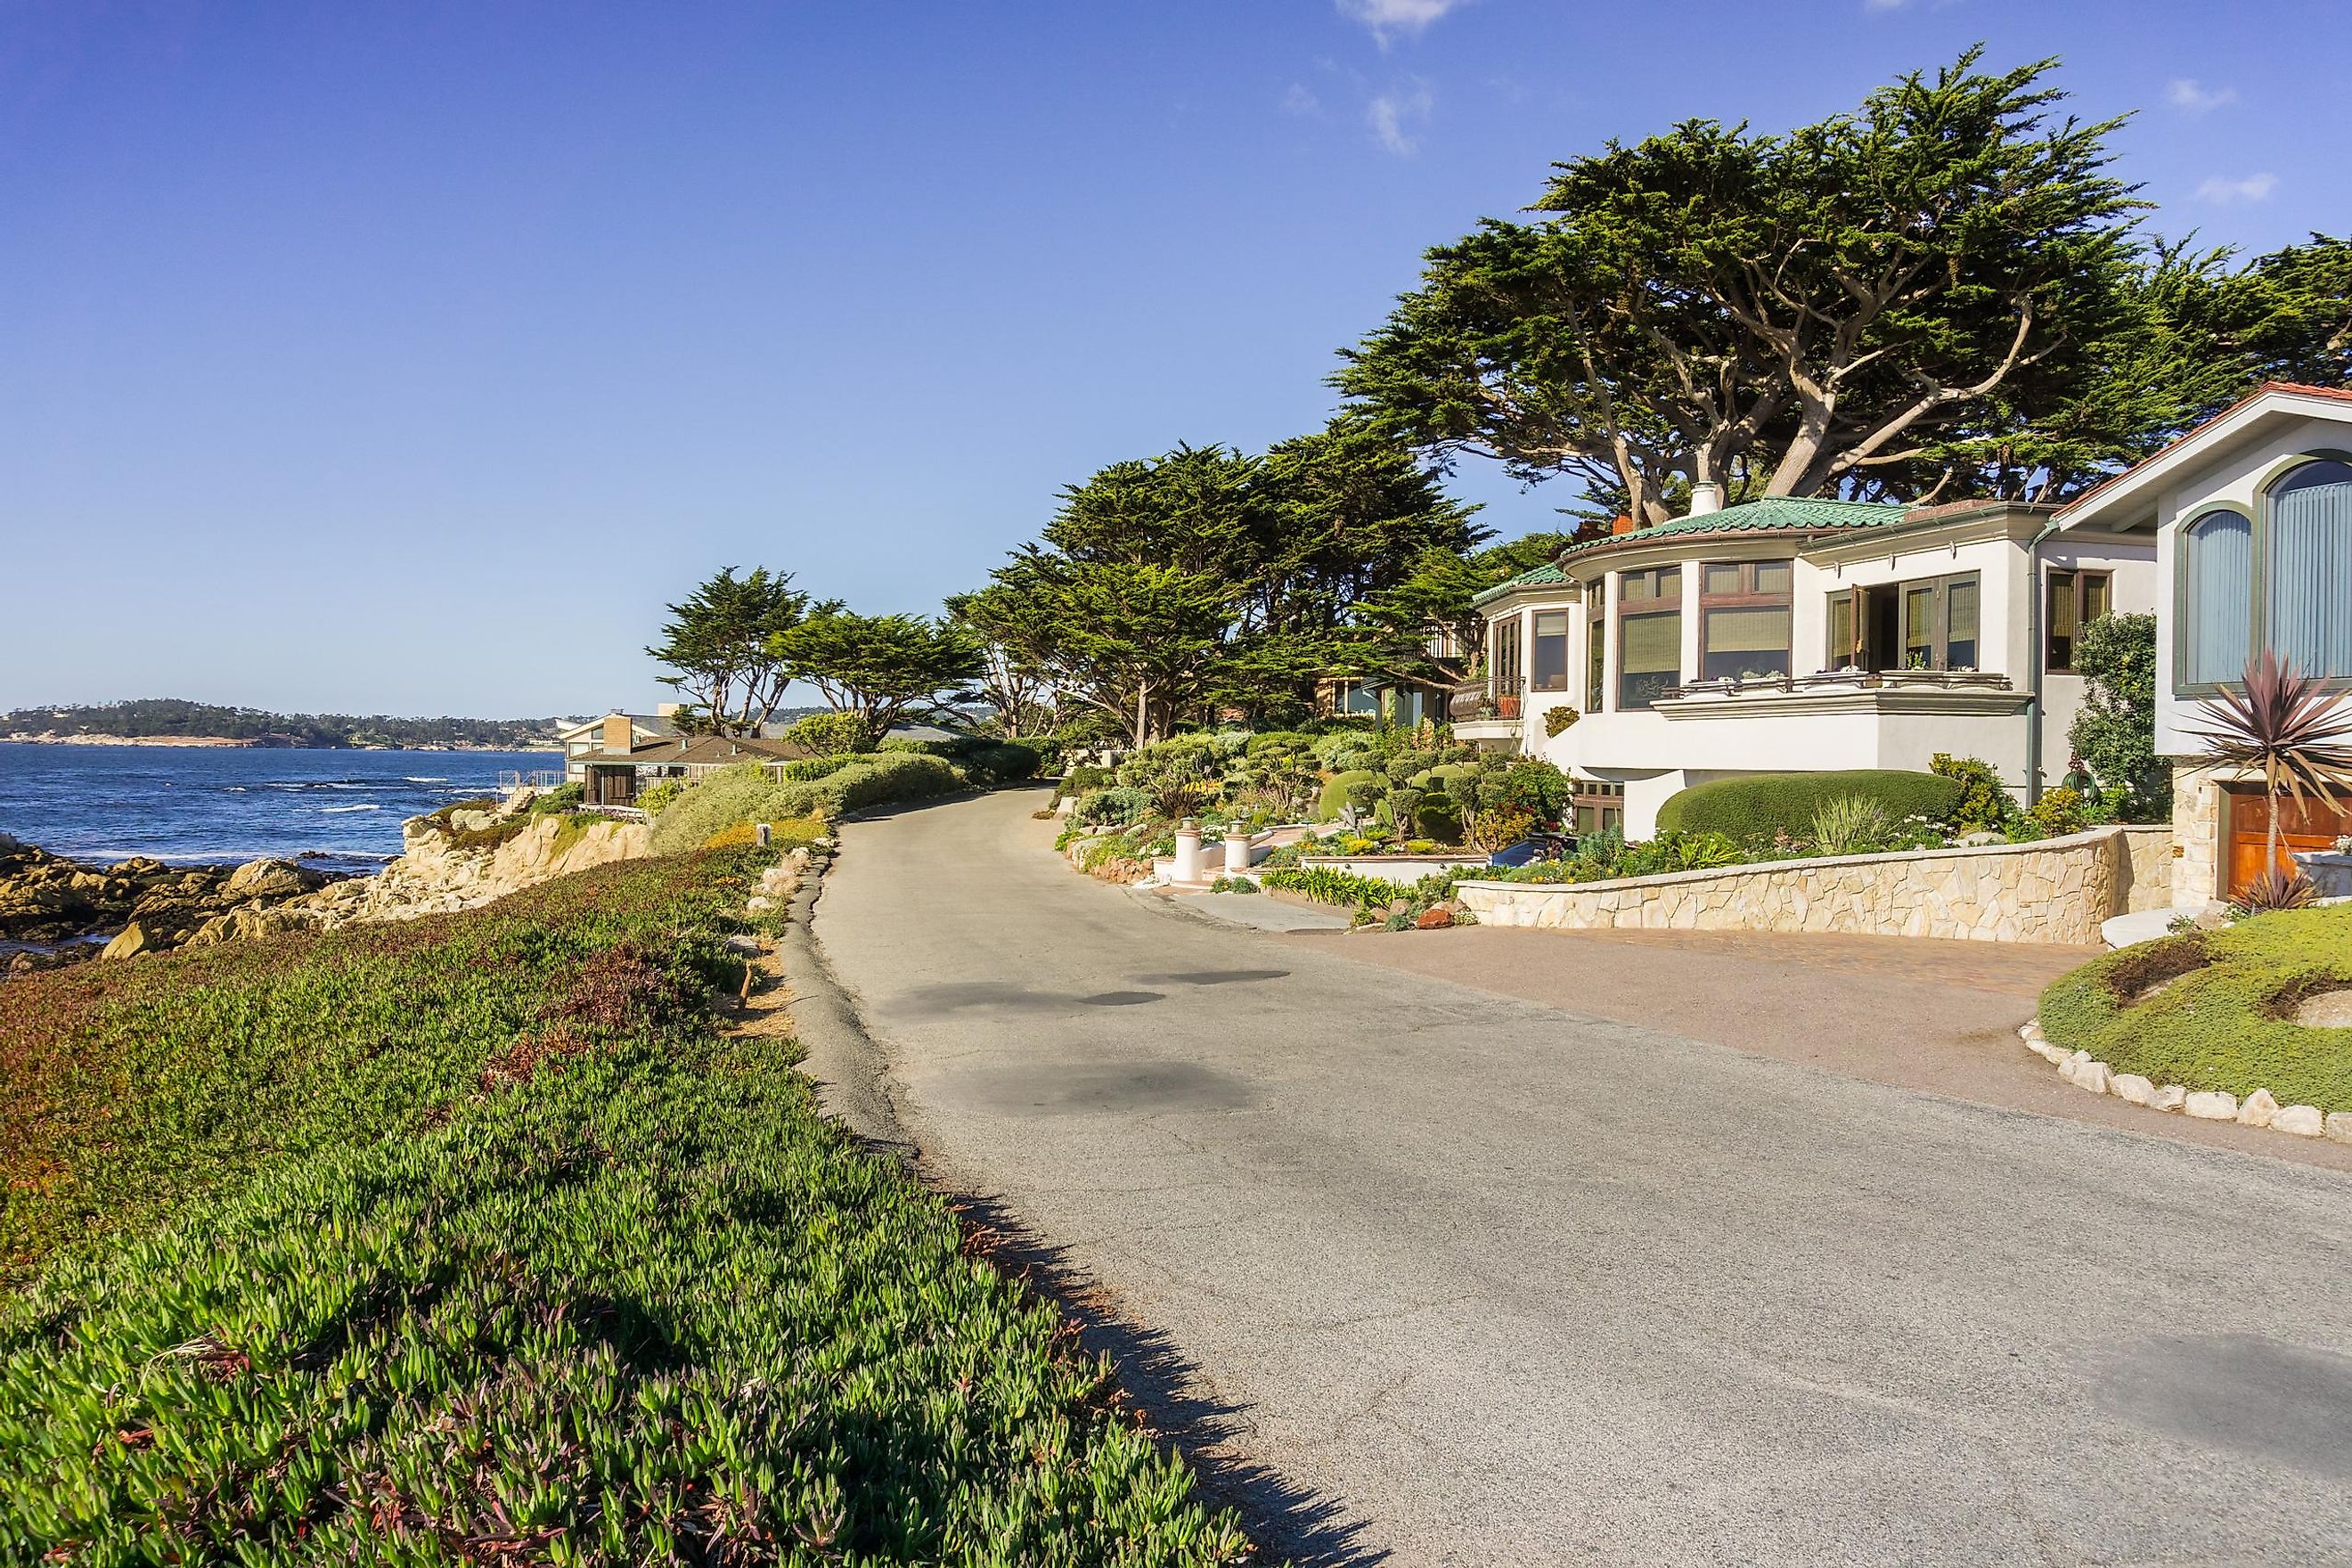 Pacific Ocean coast, in Carmel-by-the-sea, Monterey Peninsula, California.